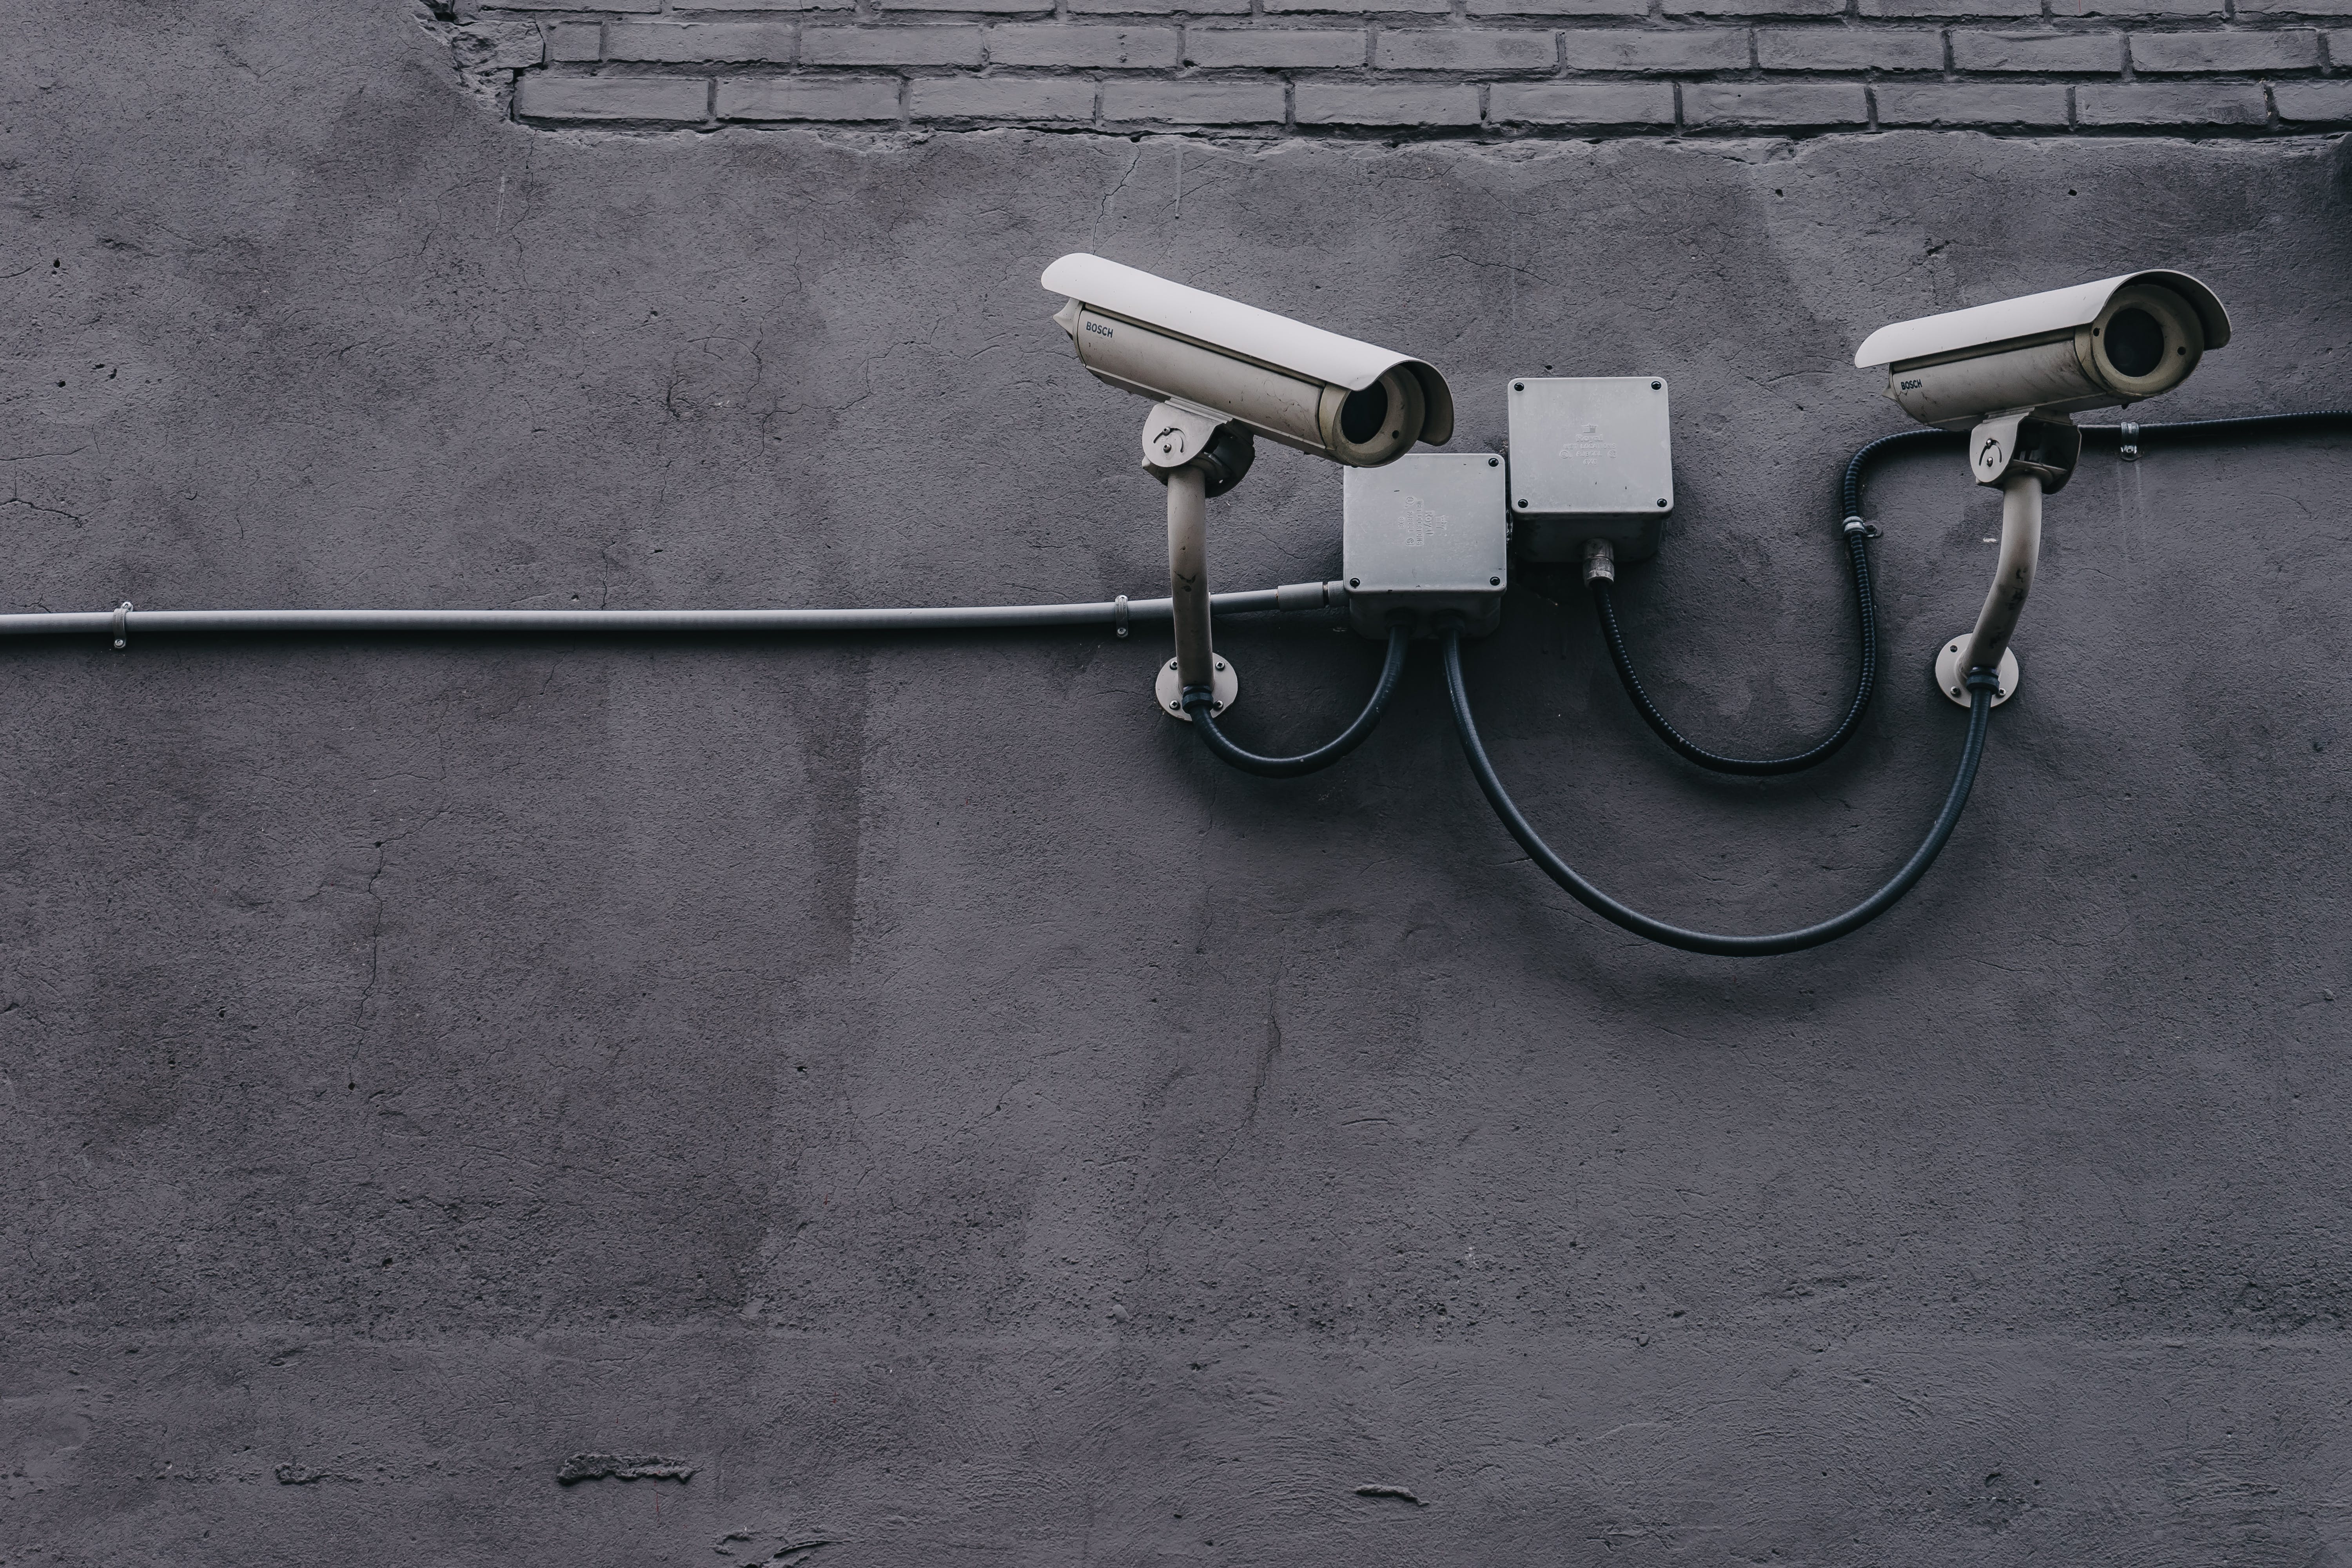 CCTV cameras. | Source: Pexels